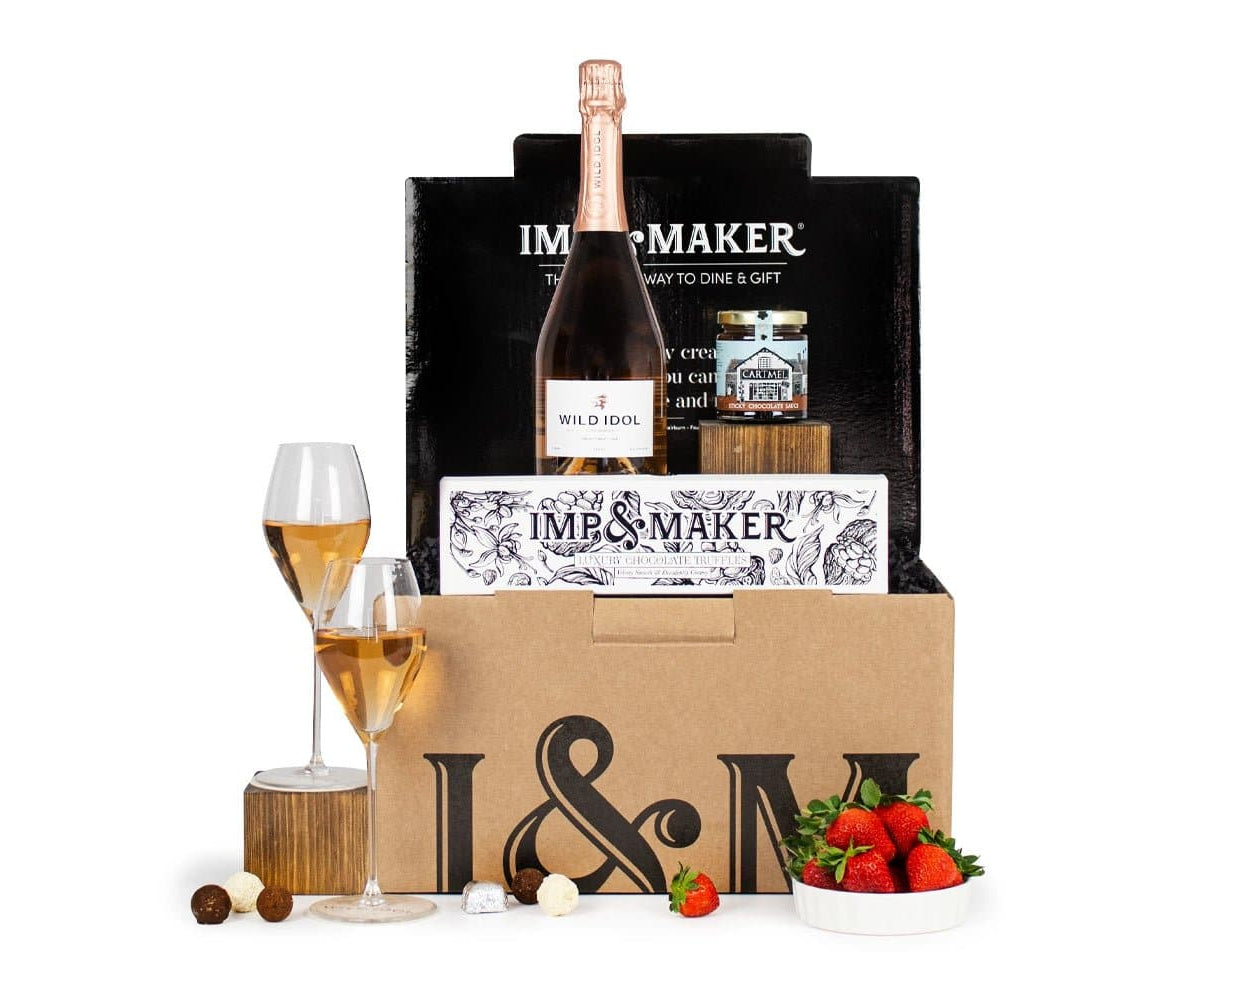 Wild Idol Alcohol-Free Rosé Wine Gift Box - IMP & MAKER